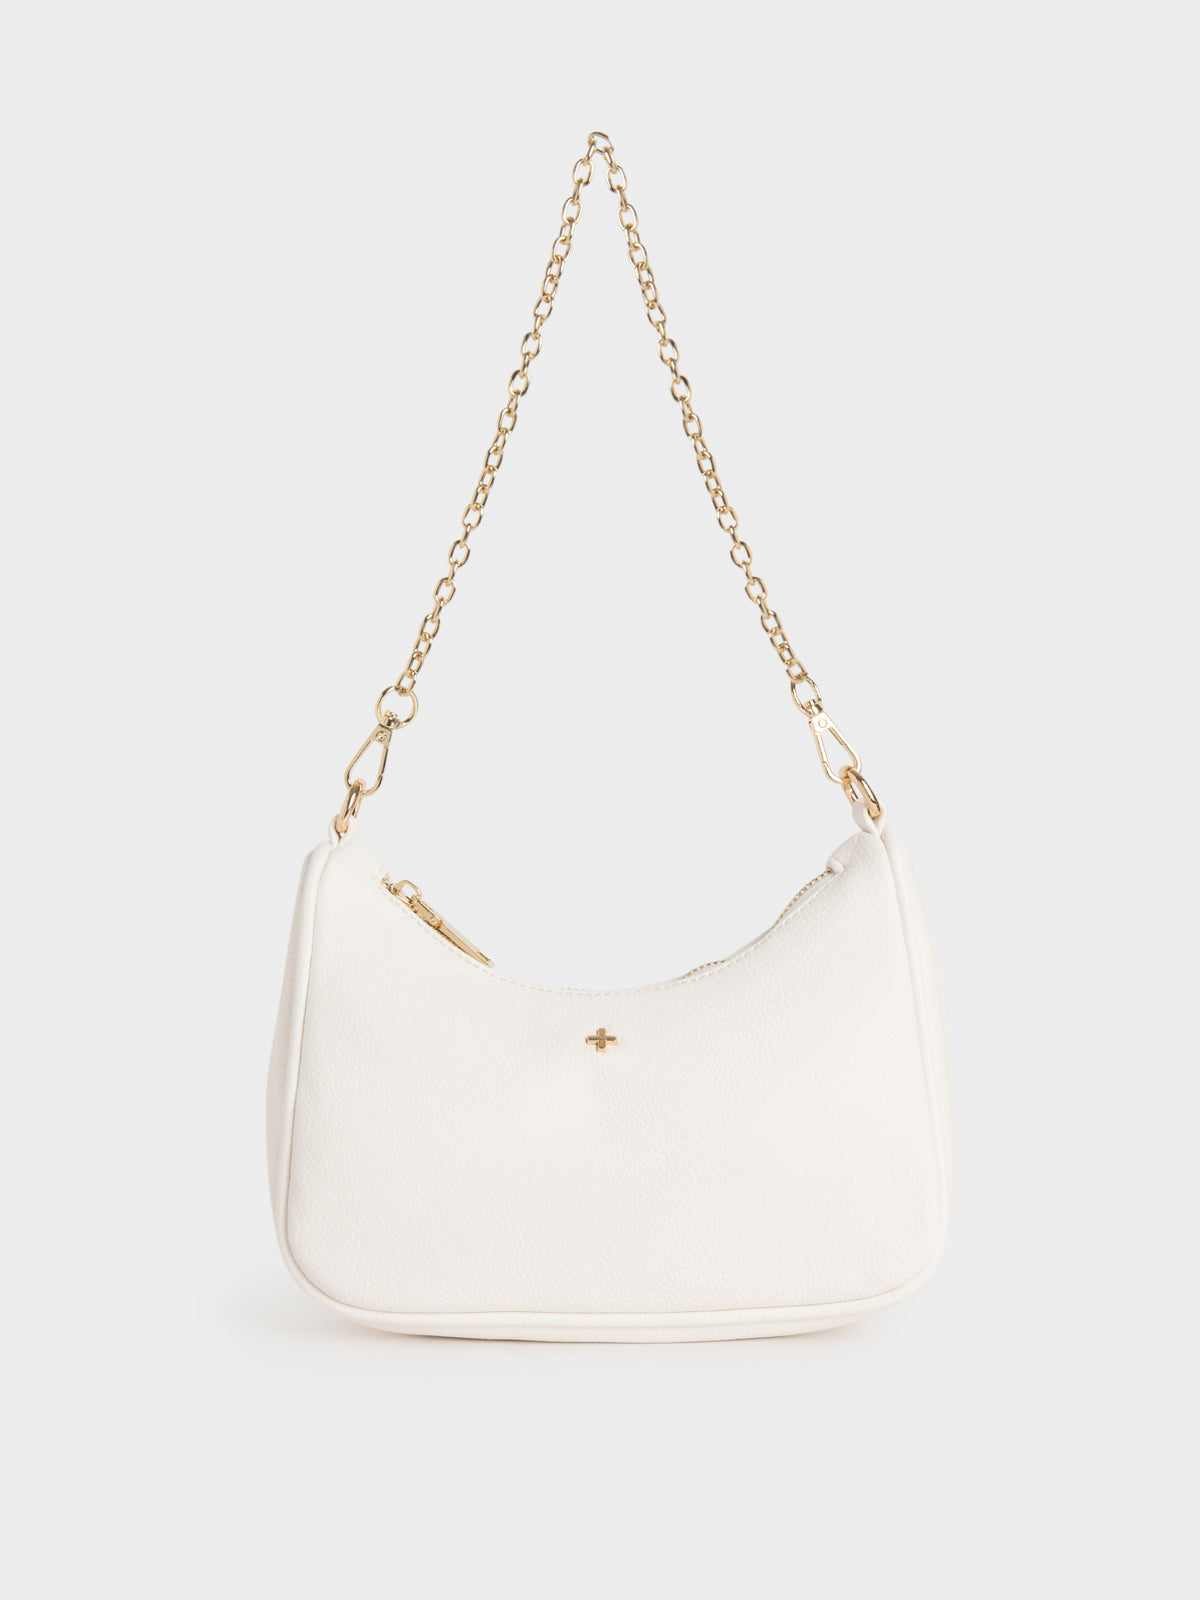 Paloma Crossbody Shoulder Bag in White Pebble